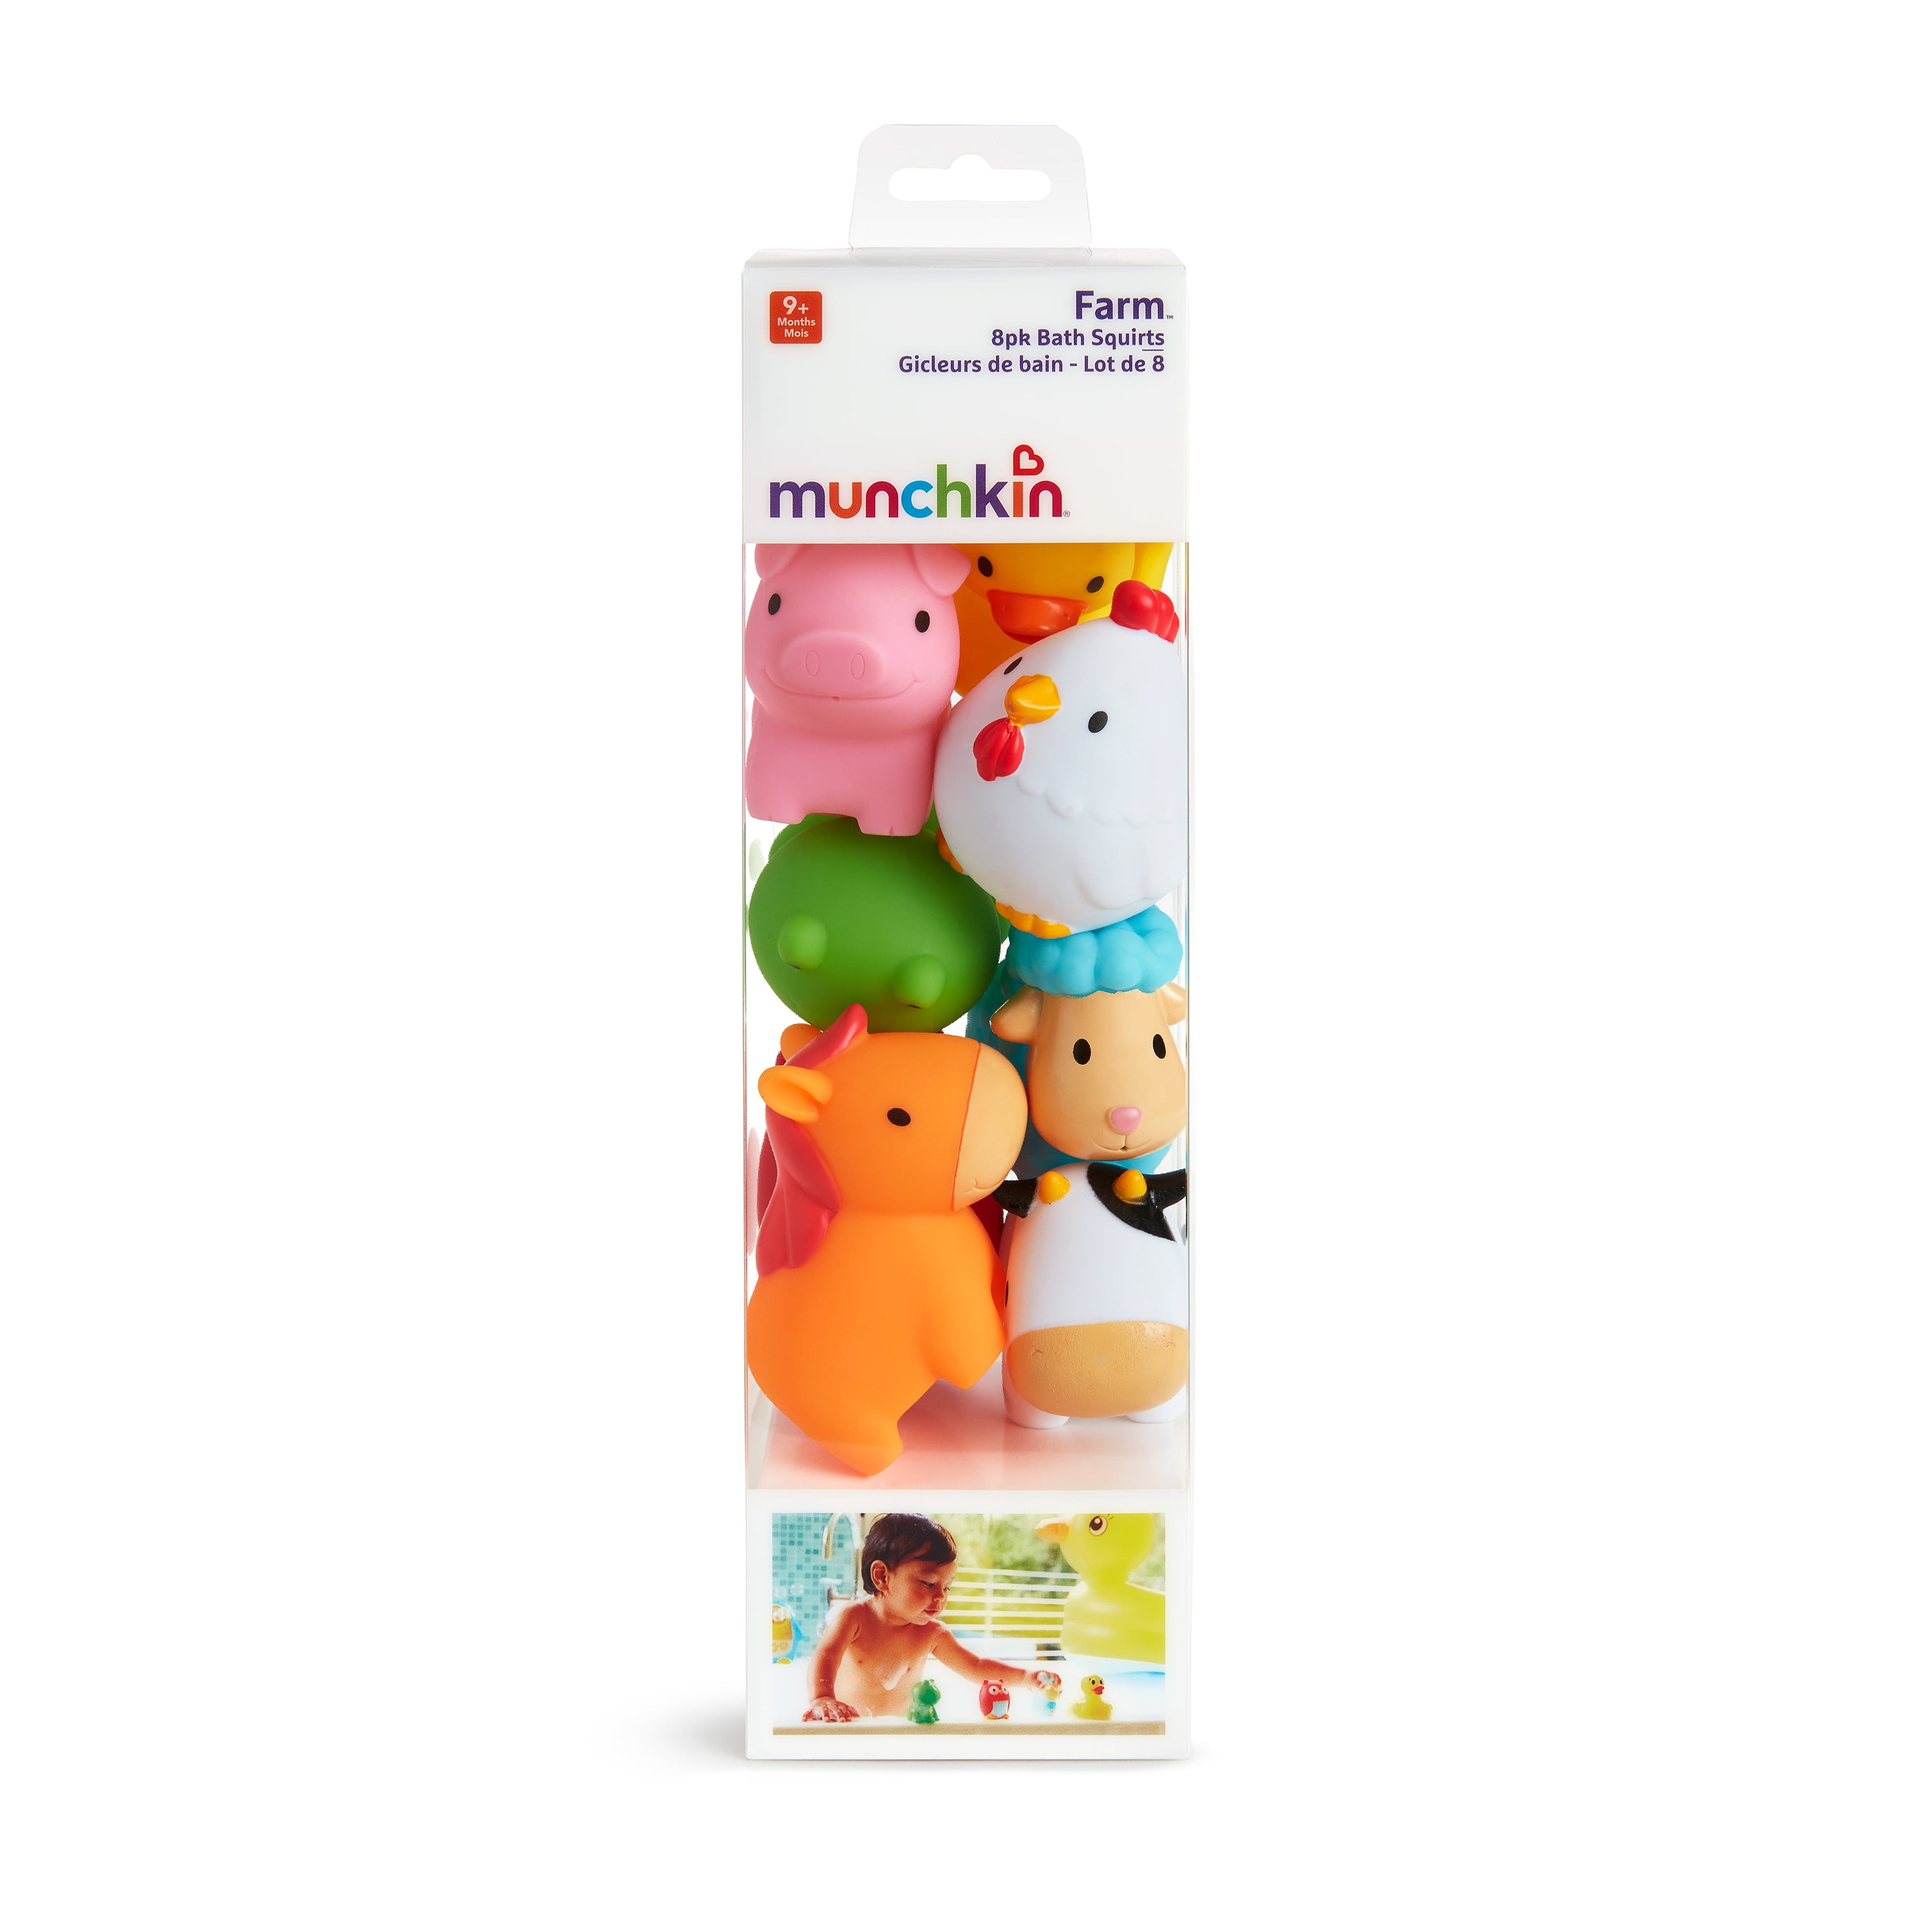 munchkin baby bath toys